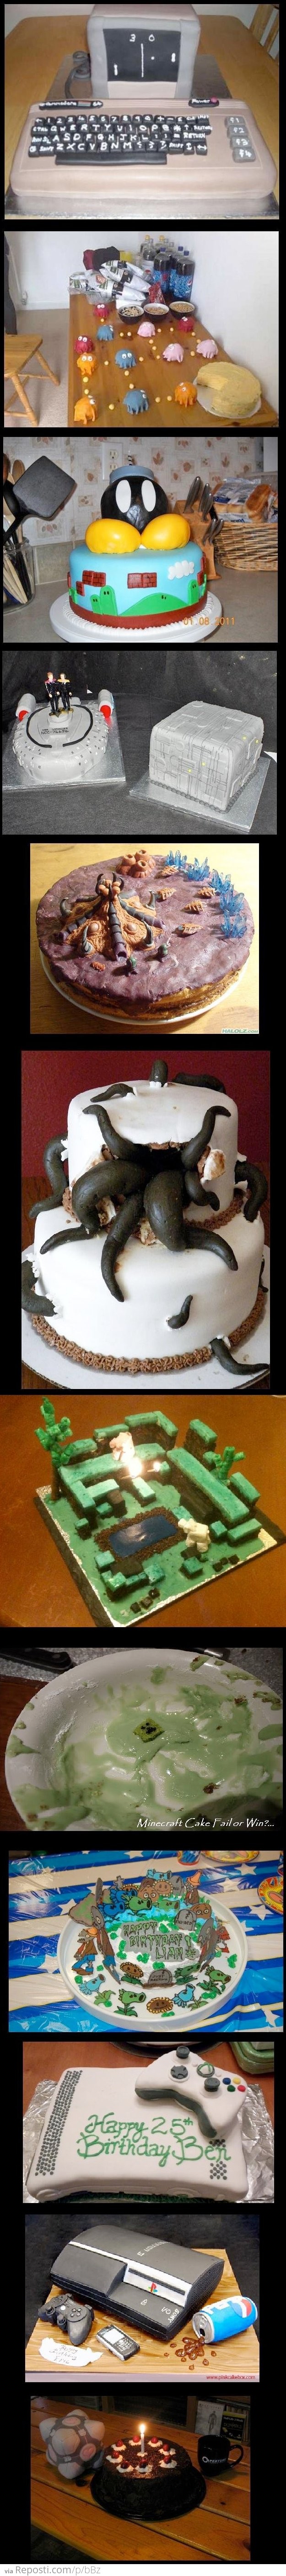 Crazy Cakes